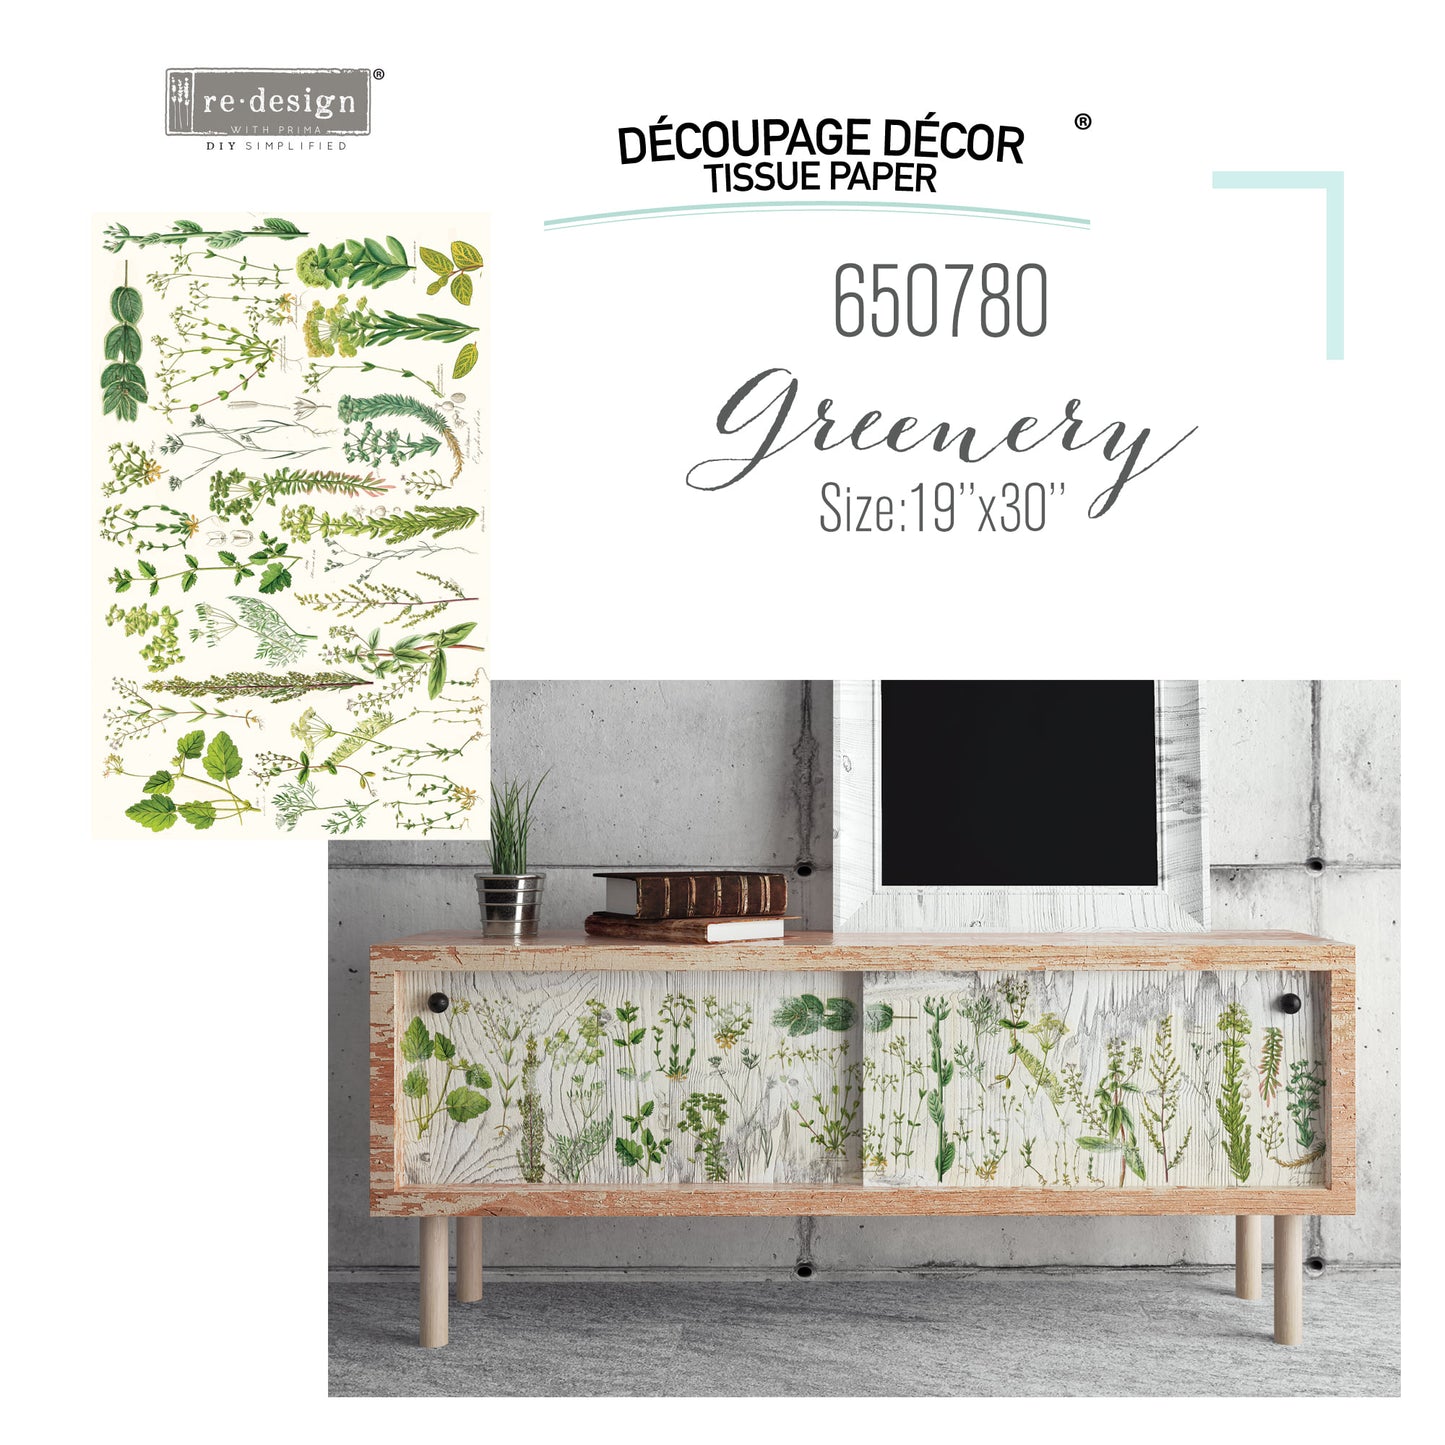 Greenery - Redesign Decoupage Decor Tissue Paper